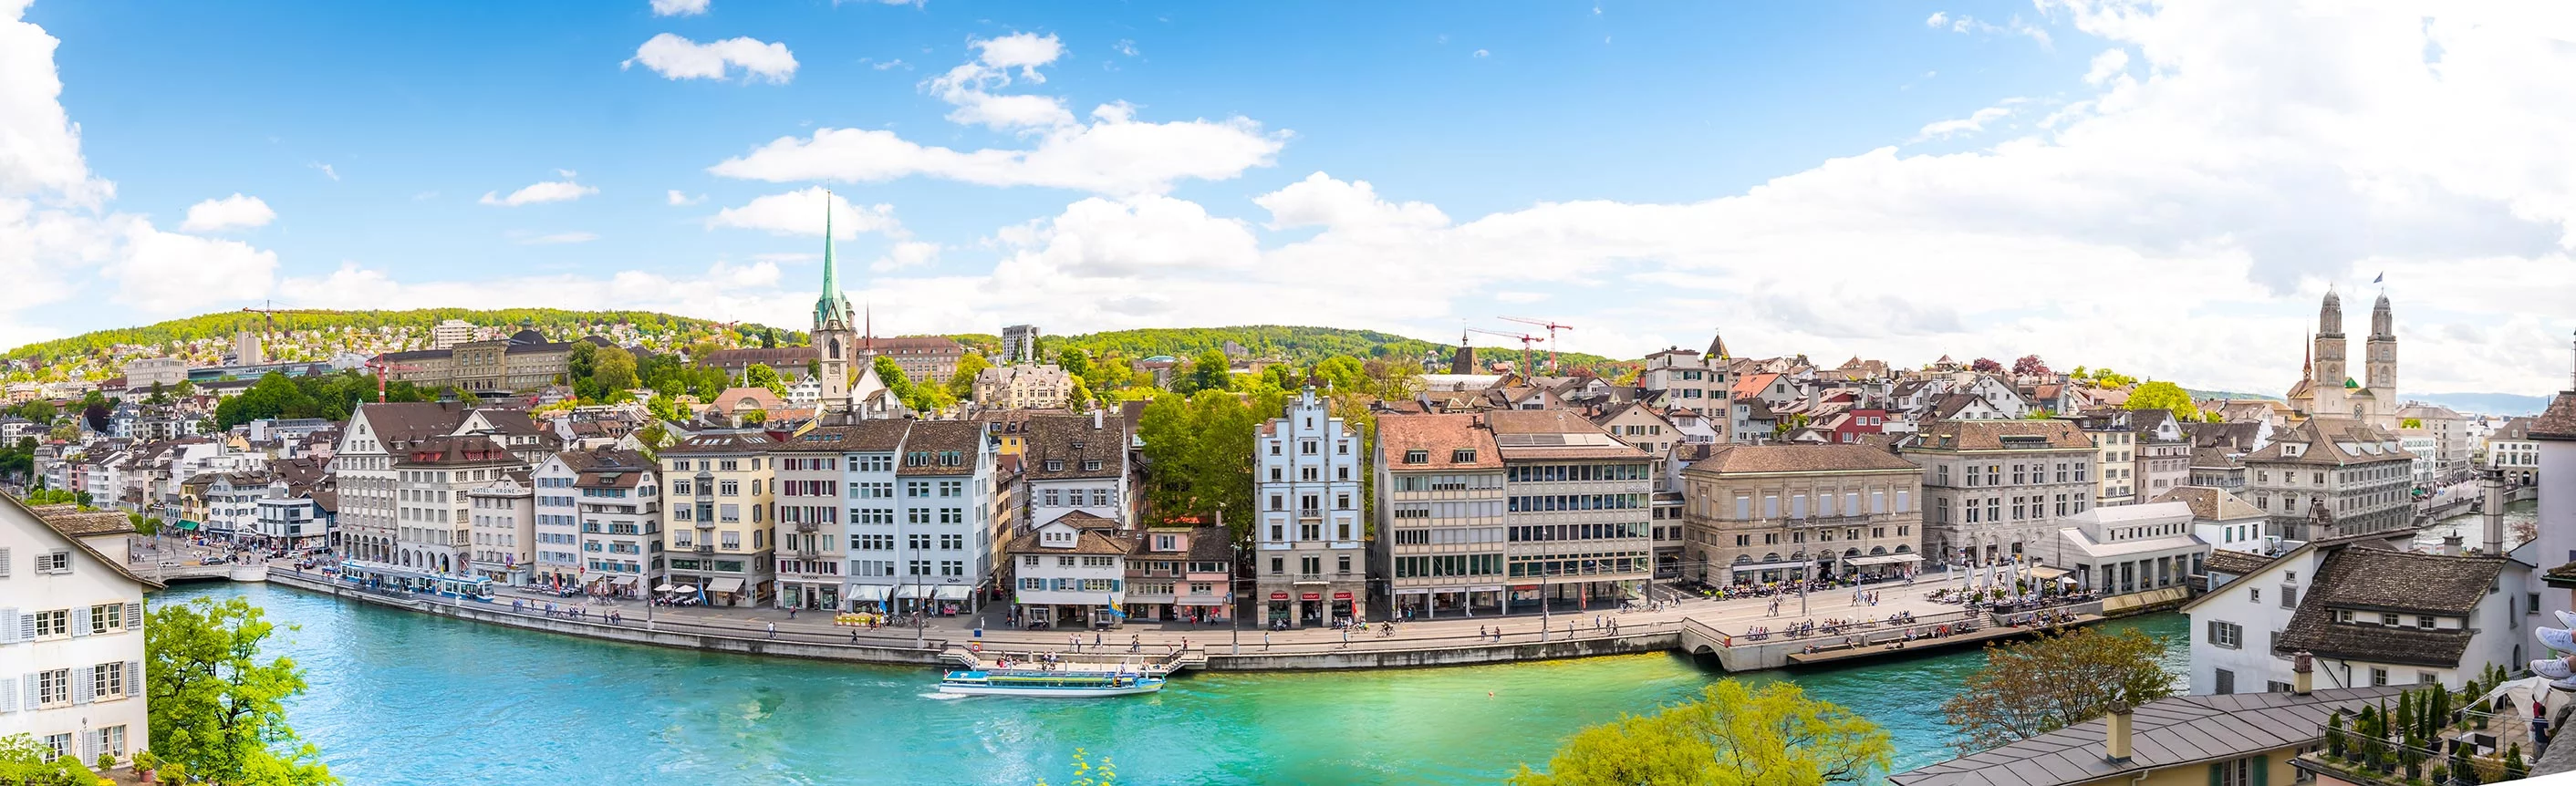 Zurich itinerary - Things to do in Zurich - Lindenhof Panorama